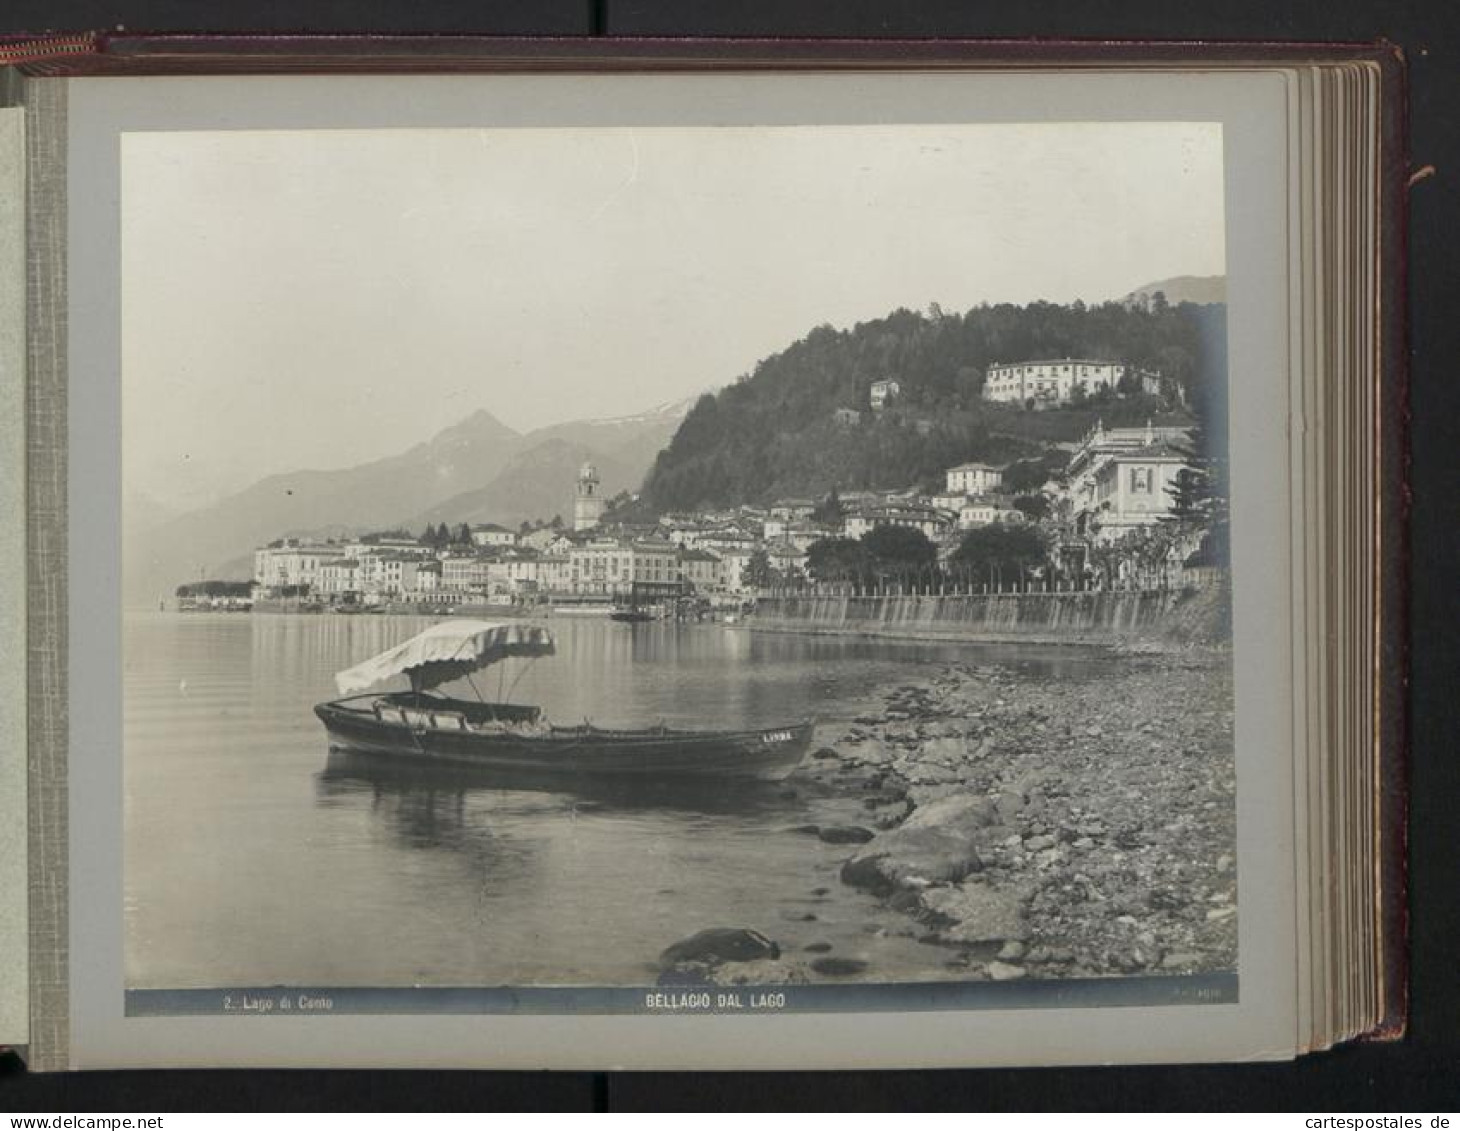 Fotoalbum mit 38 Fotografien, Ansicht Lugano, Panorama vom Monte Salvatore, Morcote, Gandria, Lago di Lugano 